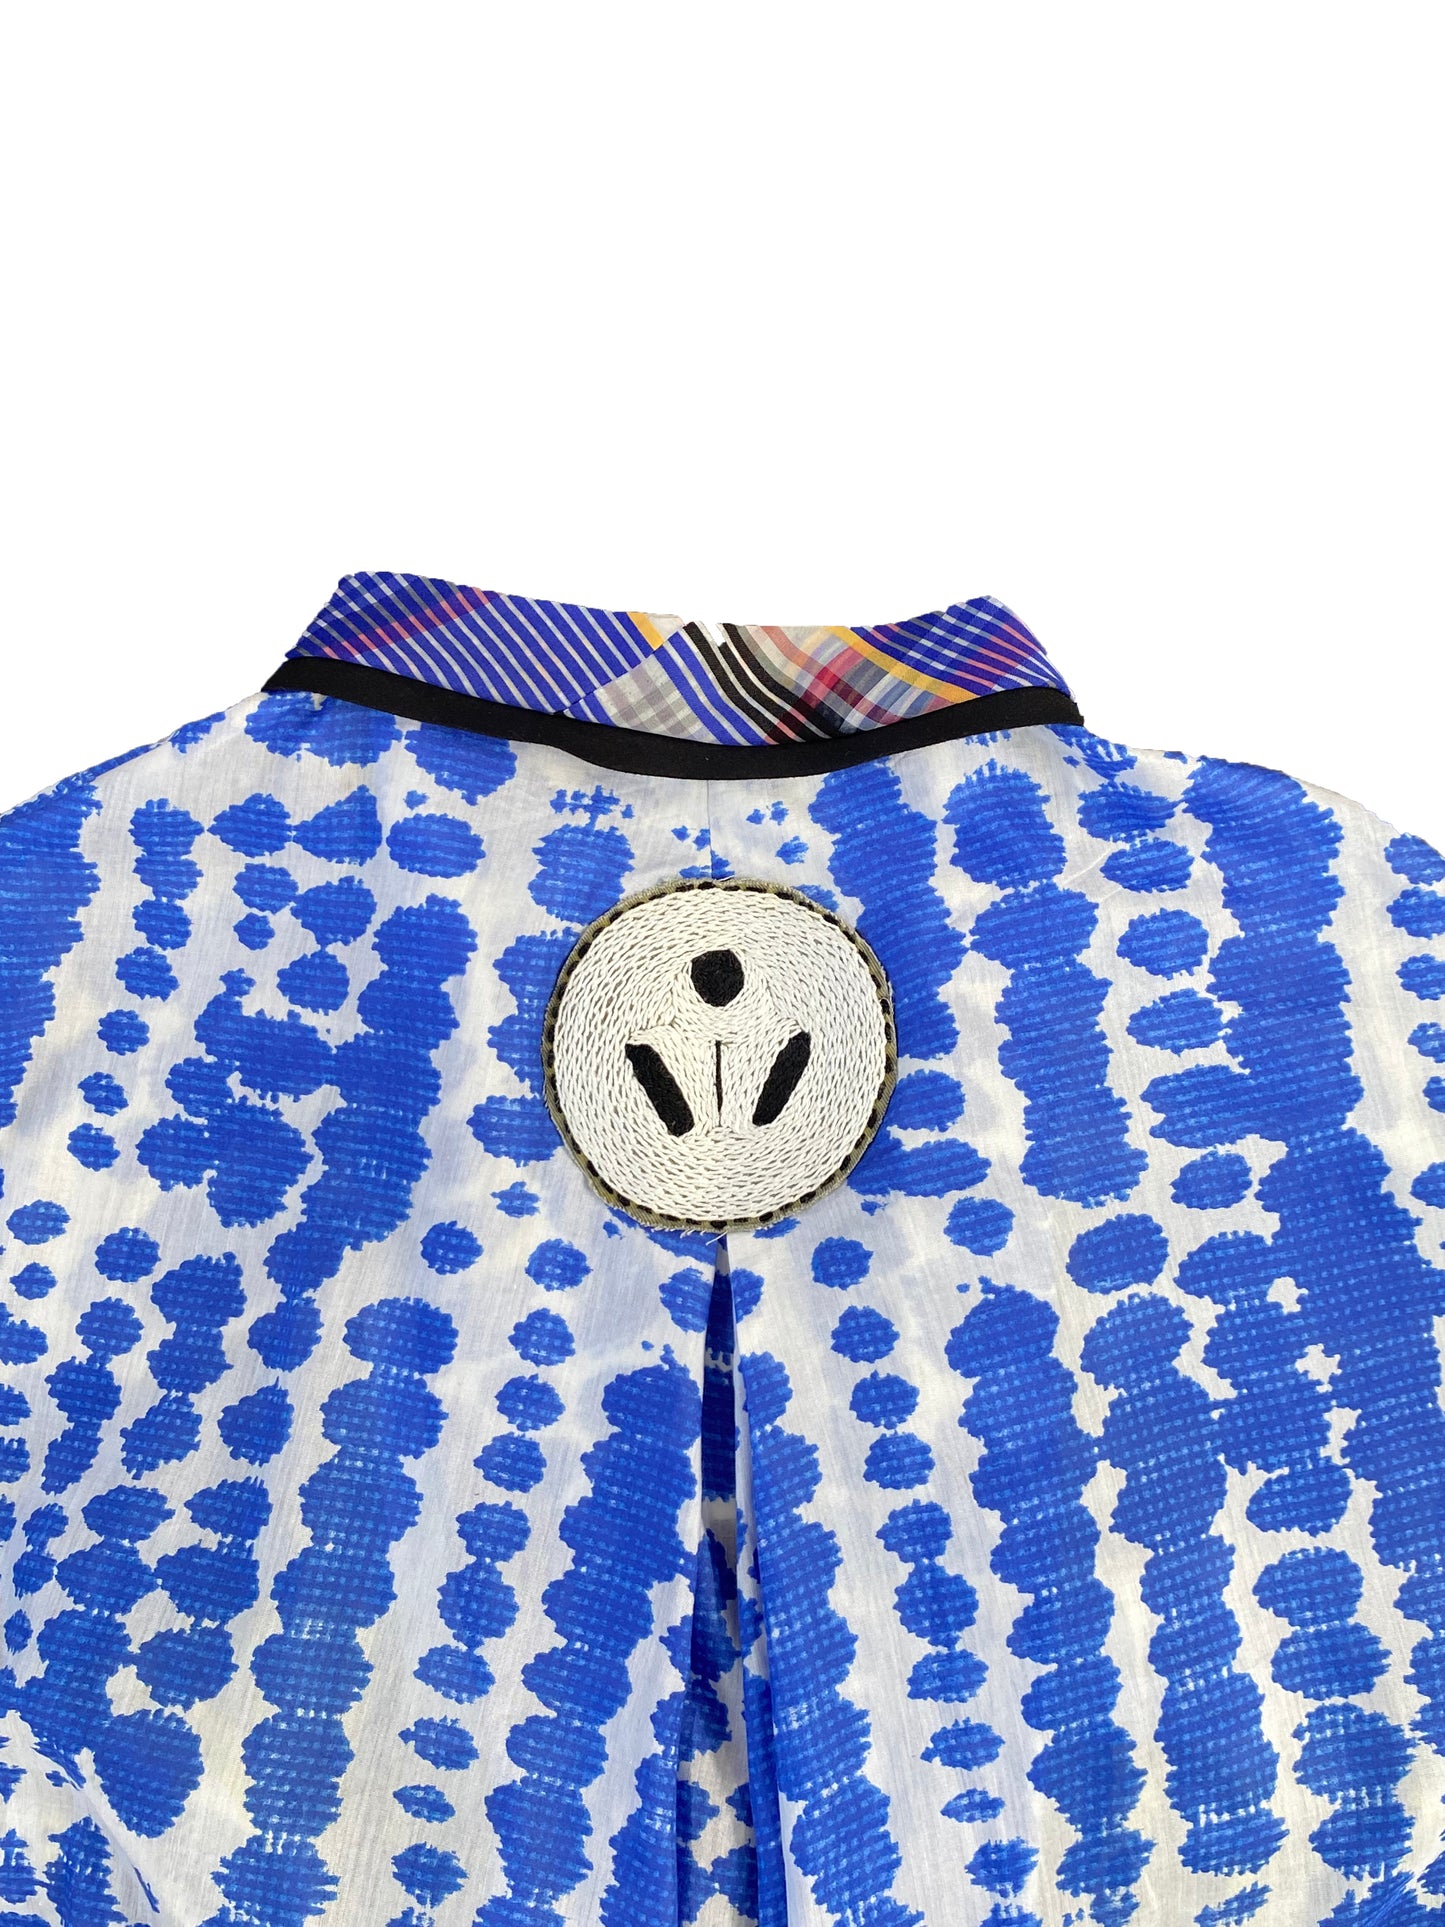 Cotton-Silk Hybrid Kimono with Hand Embroidery Stitches